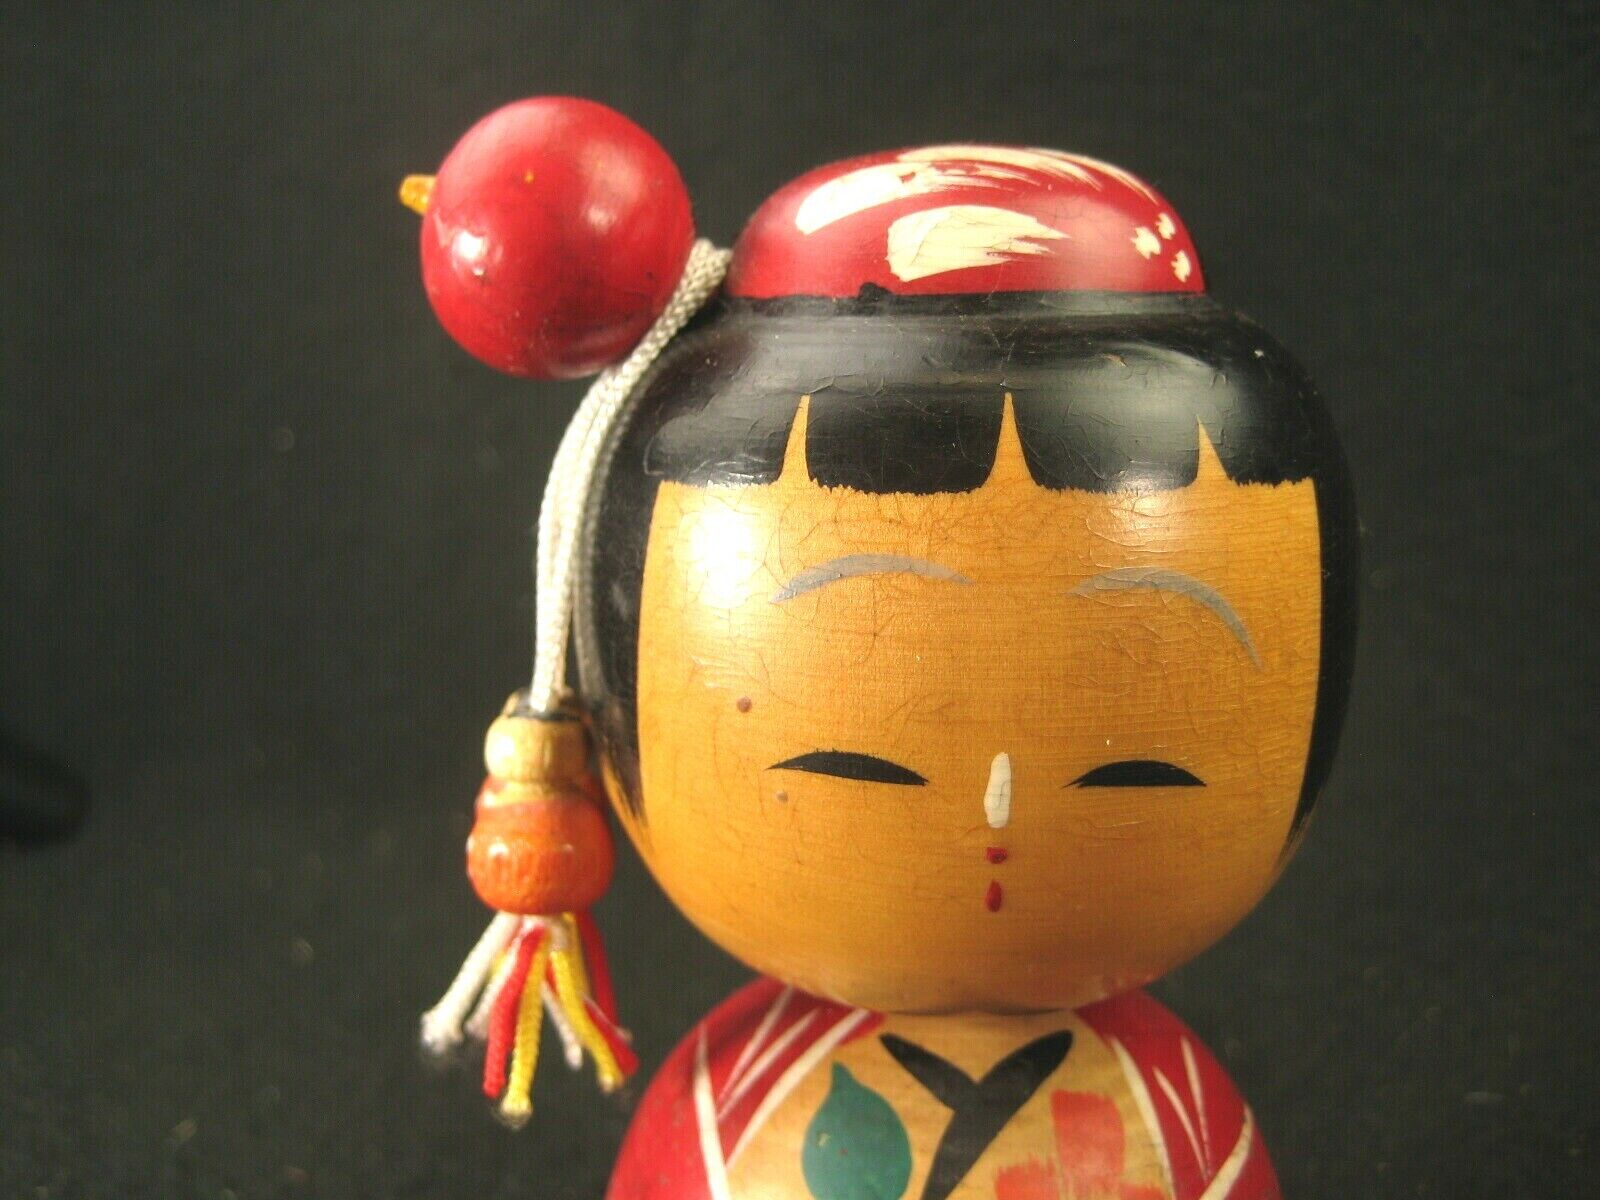 Kokeshi Wooden Dolls, Japan, 1950, Set of 4